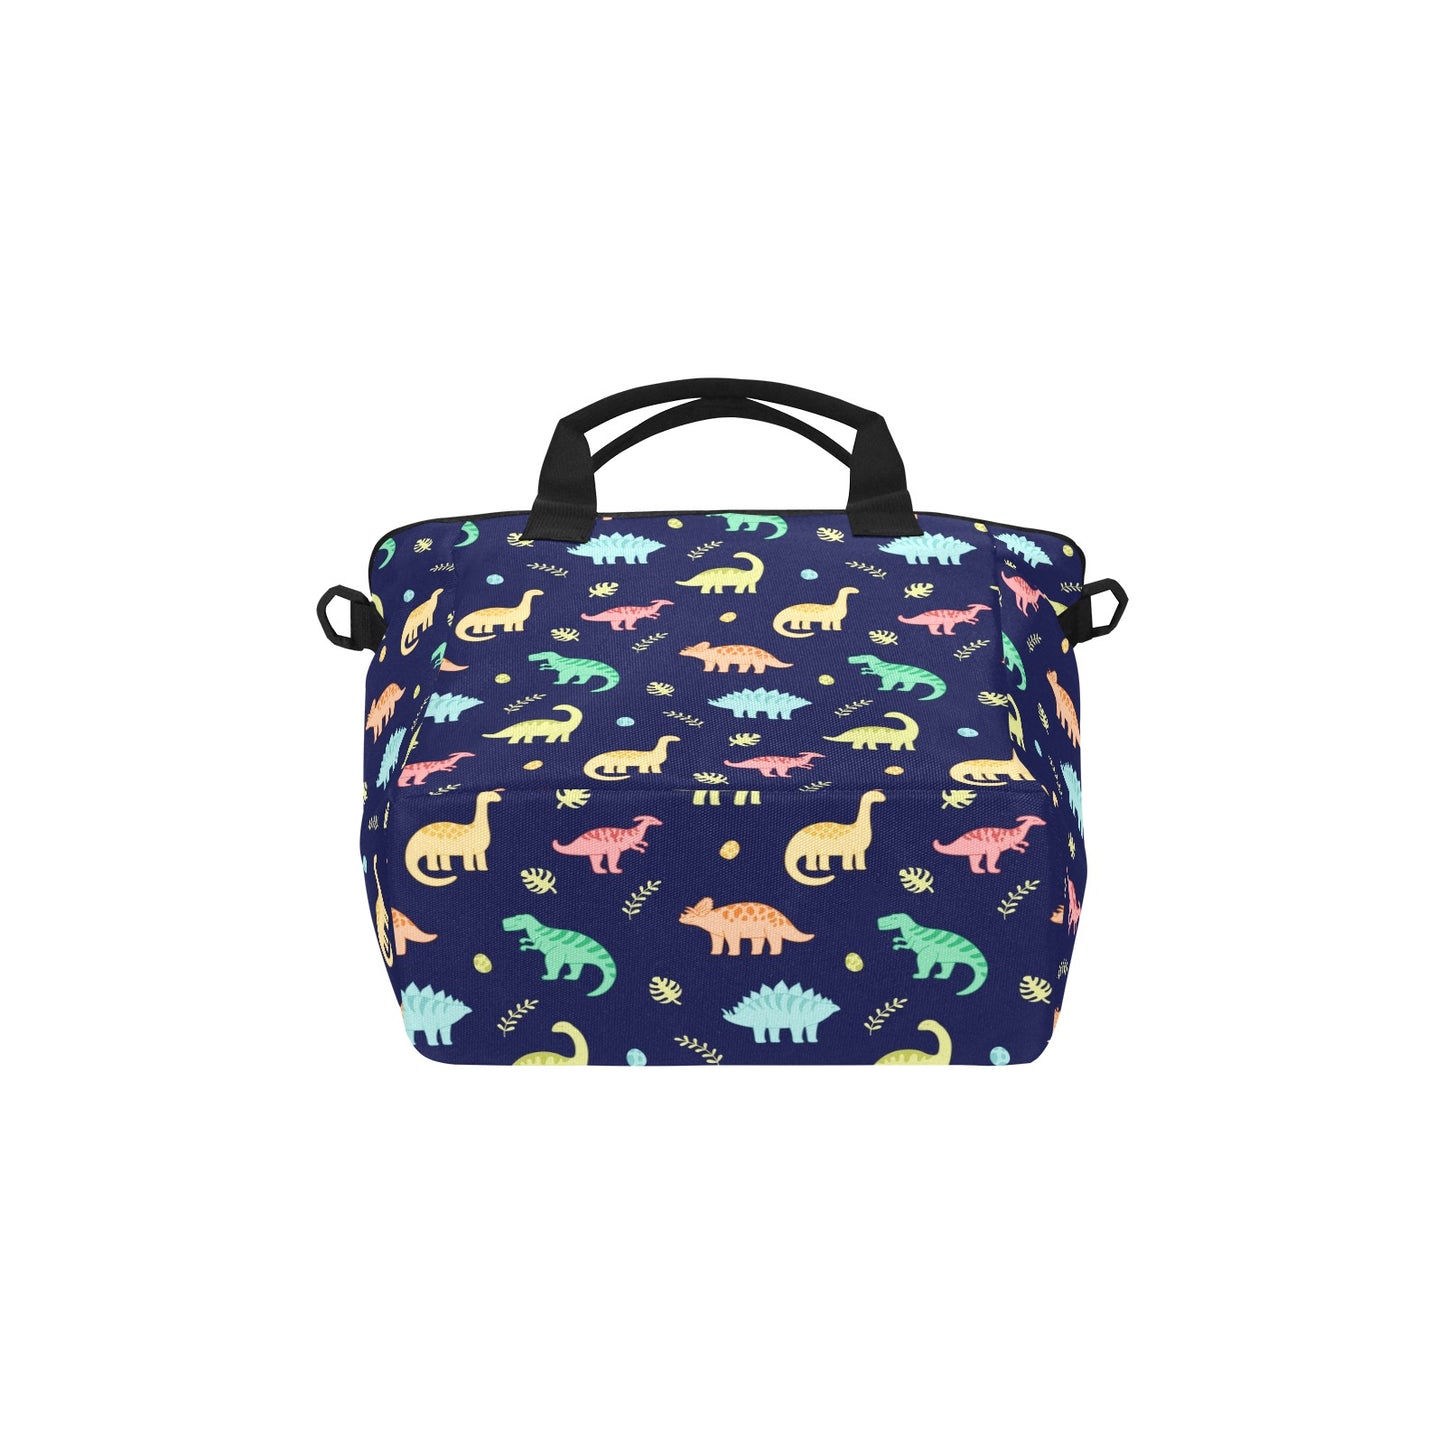 Dinosaurs - Tote Bag with Shoulder Strap Nylon Tote Bag